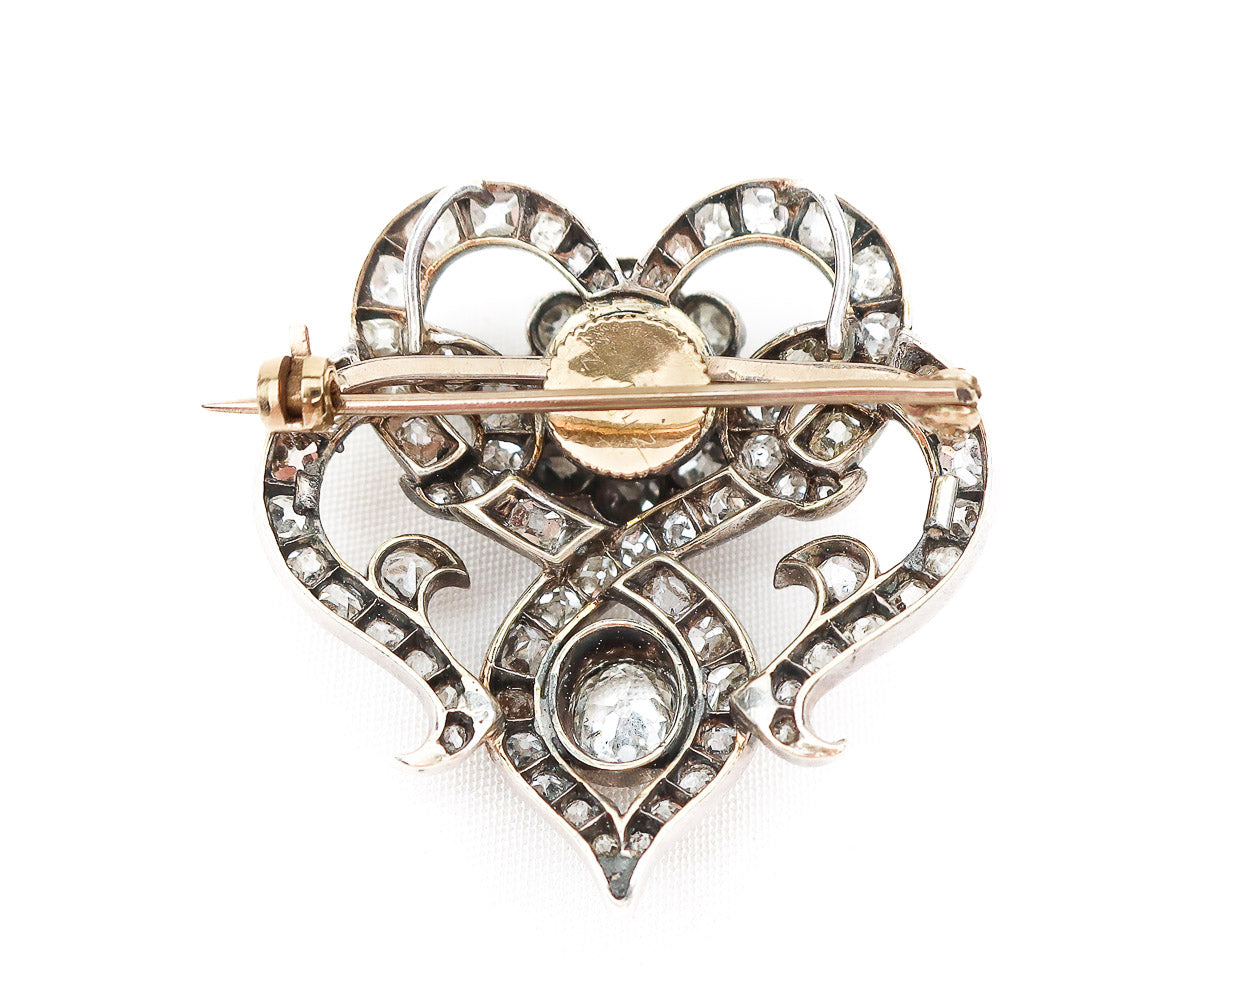 Circa 1860 Diamond Brooch